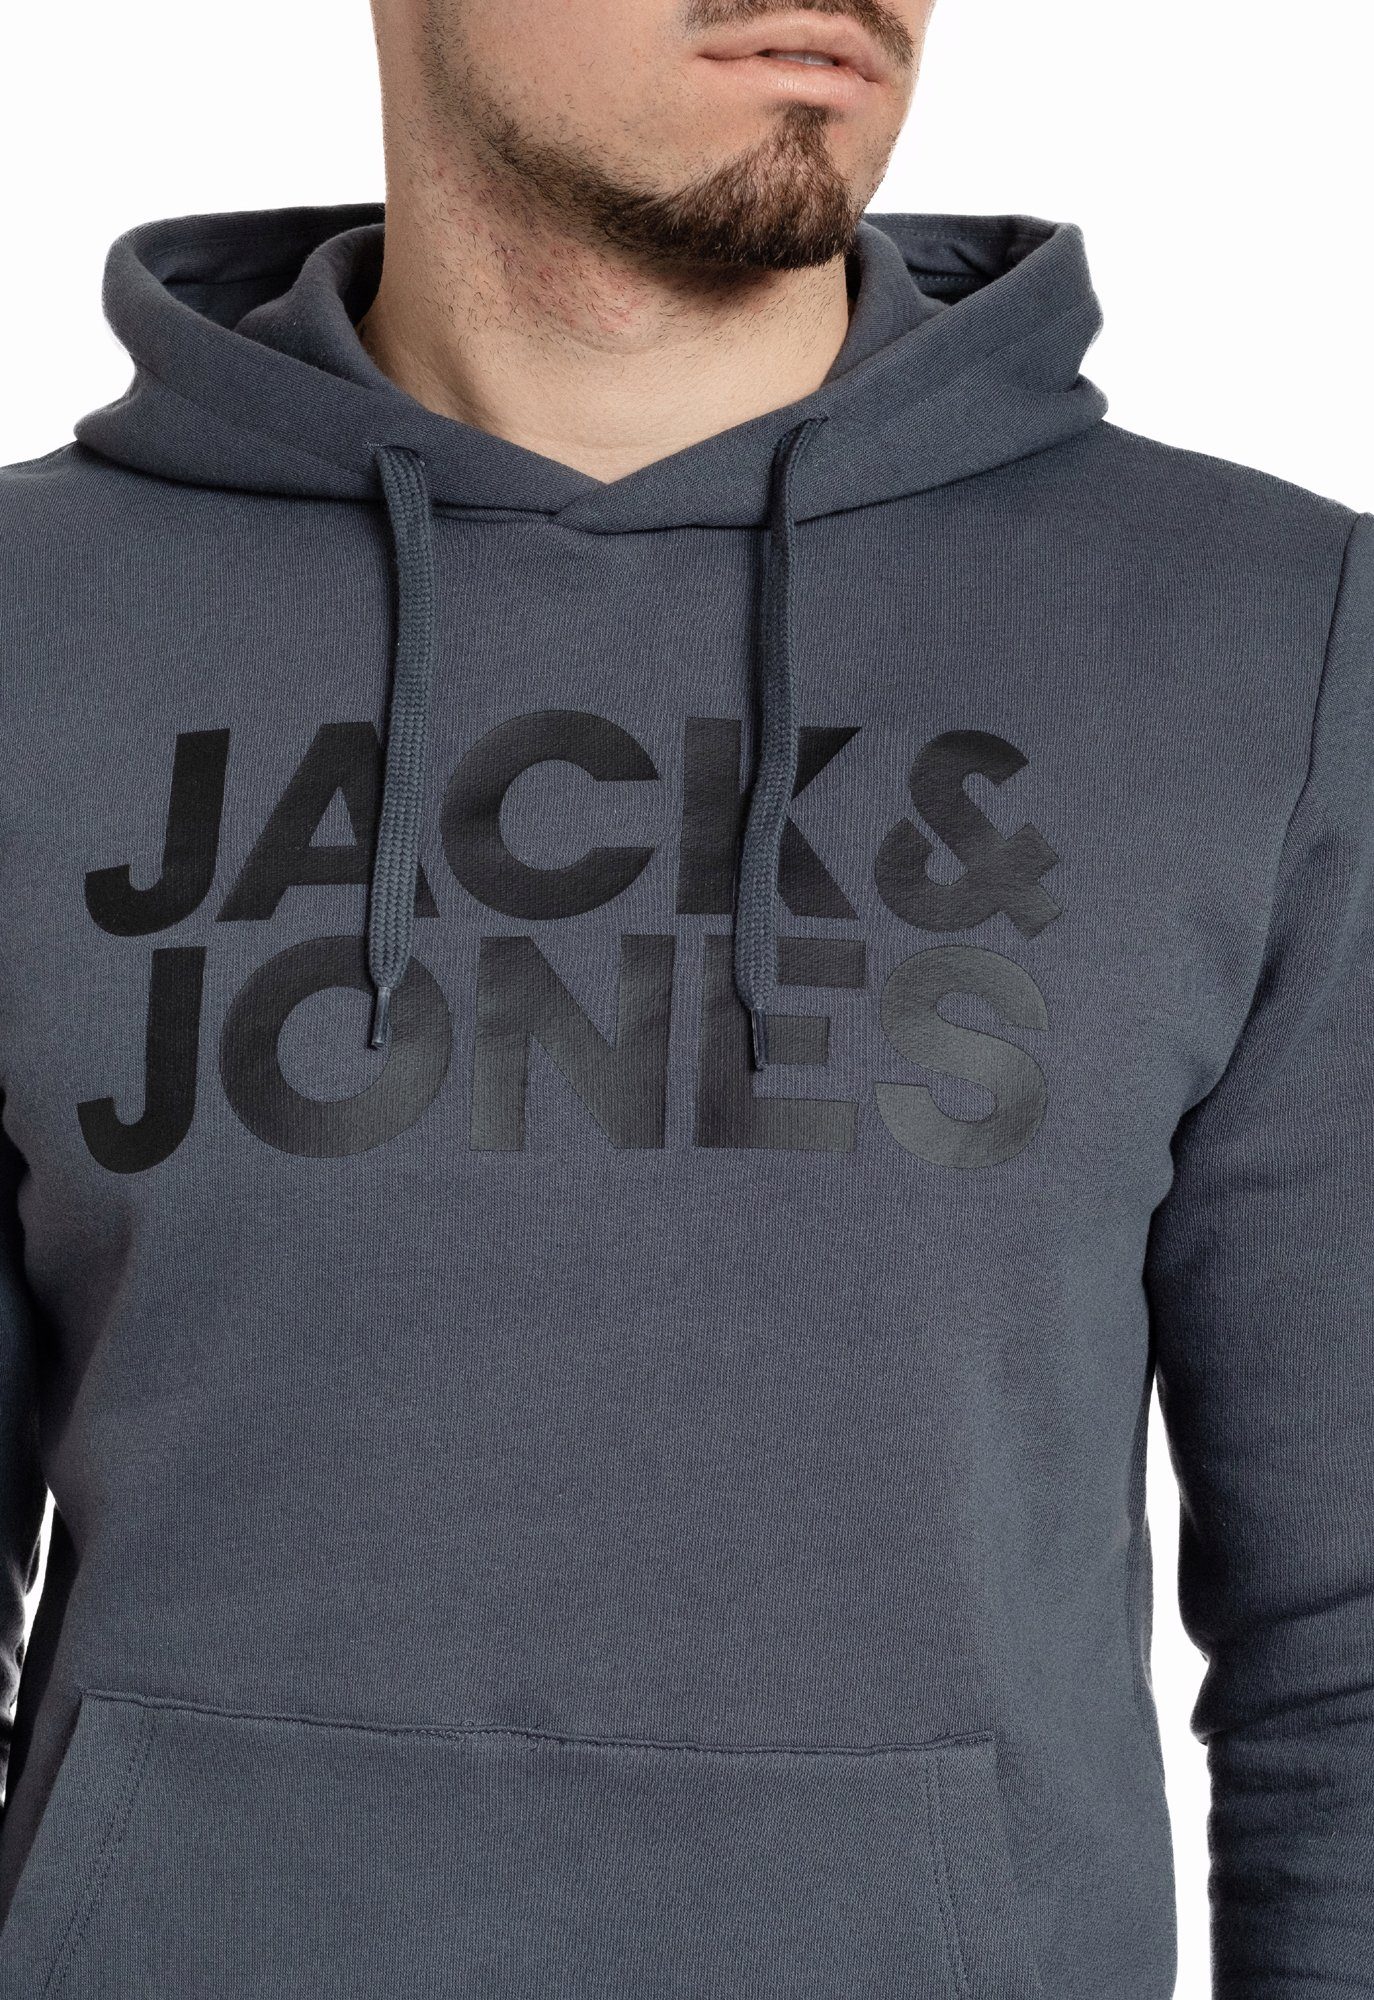 Jack & Jones Kängurutasche mit Darkslate-Black Kapuzensweatshirt